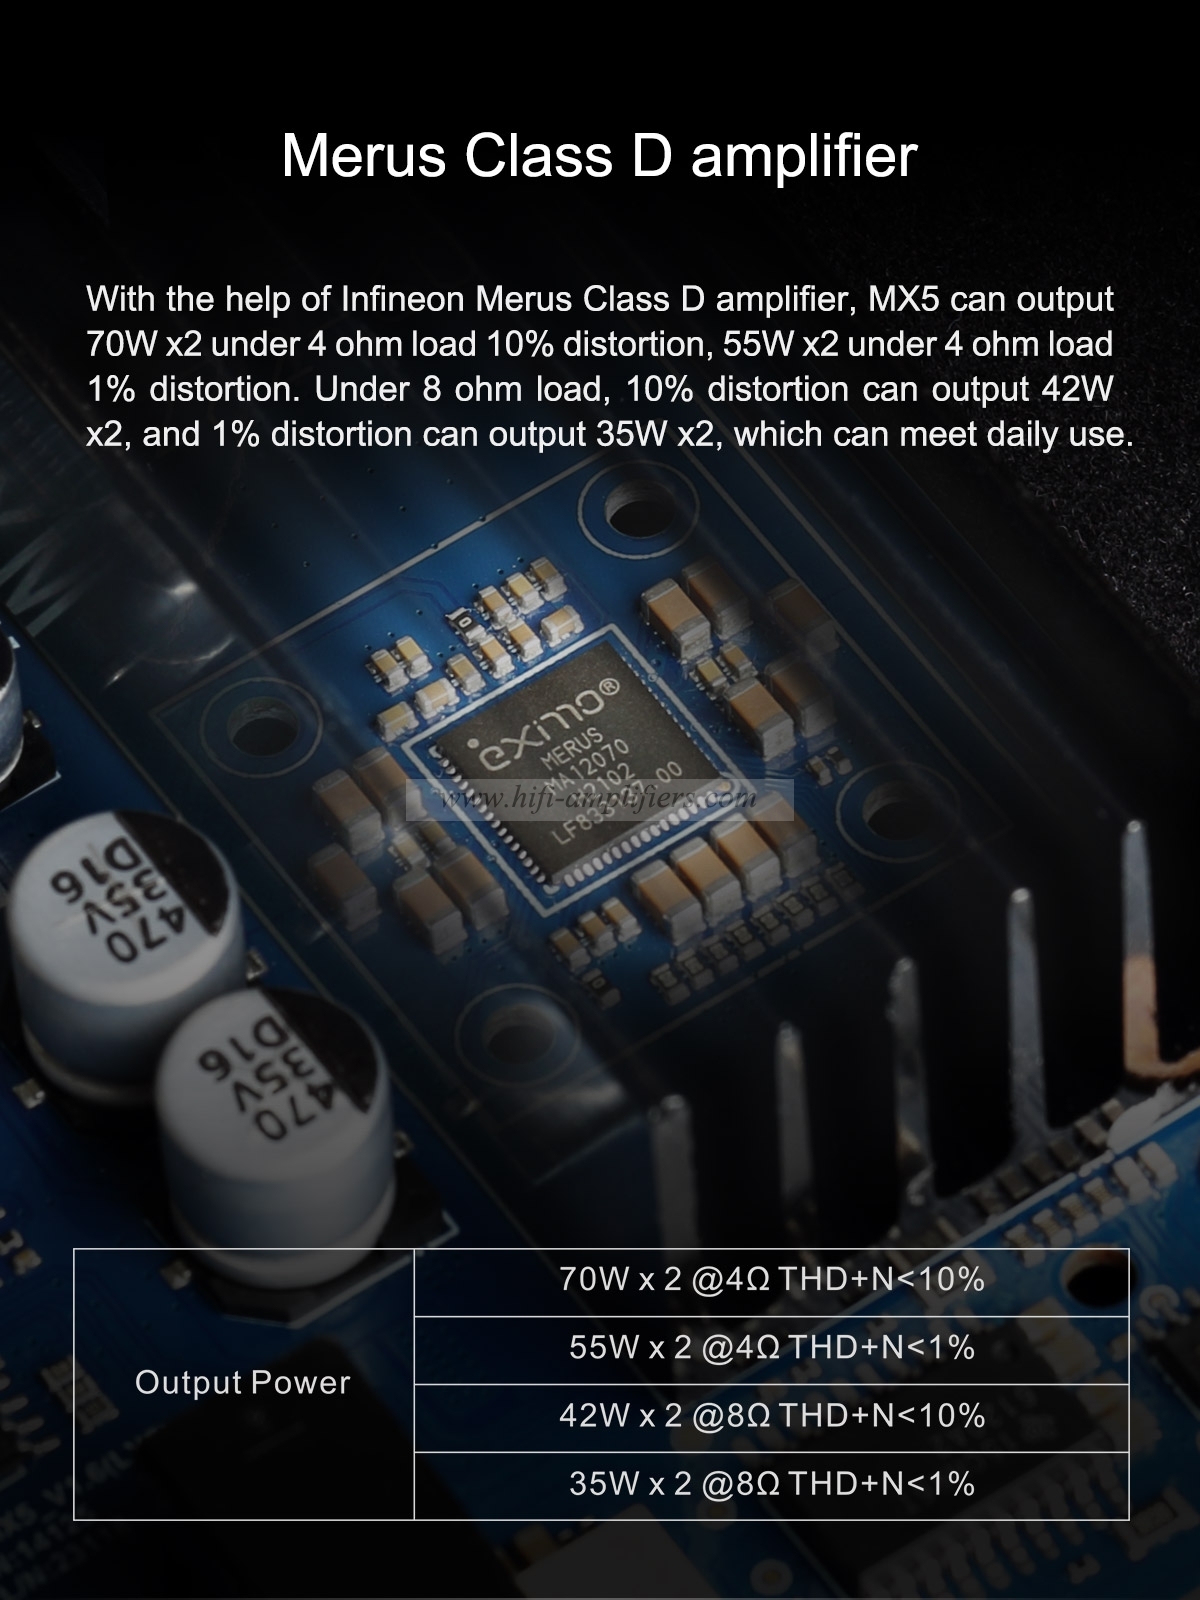 TOPPING MX5 Hi-Res Audio Multi-function Power Amplifier AMP DAC ES9018Q2C chip 1600mW*2 NFCA Headphone Amplifier APTX DSD256